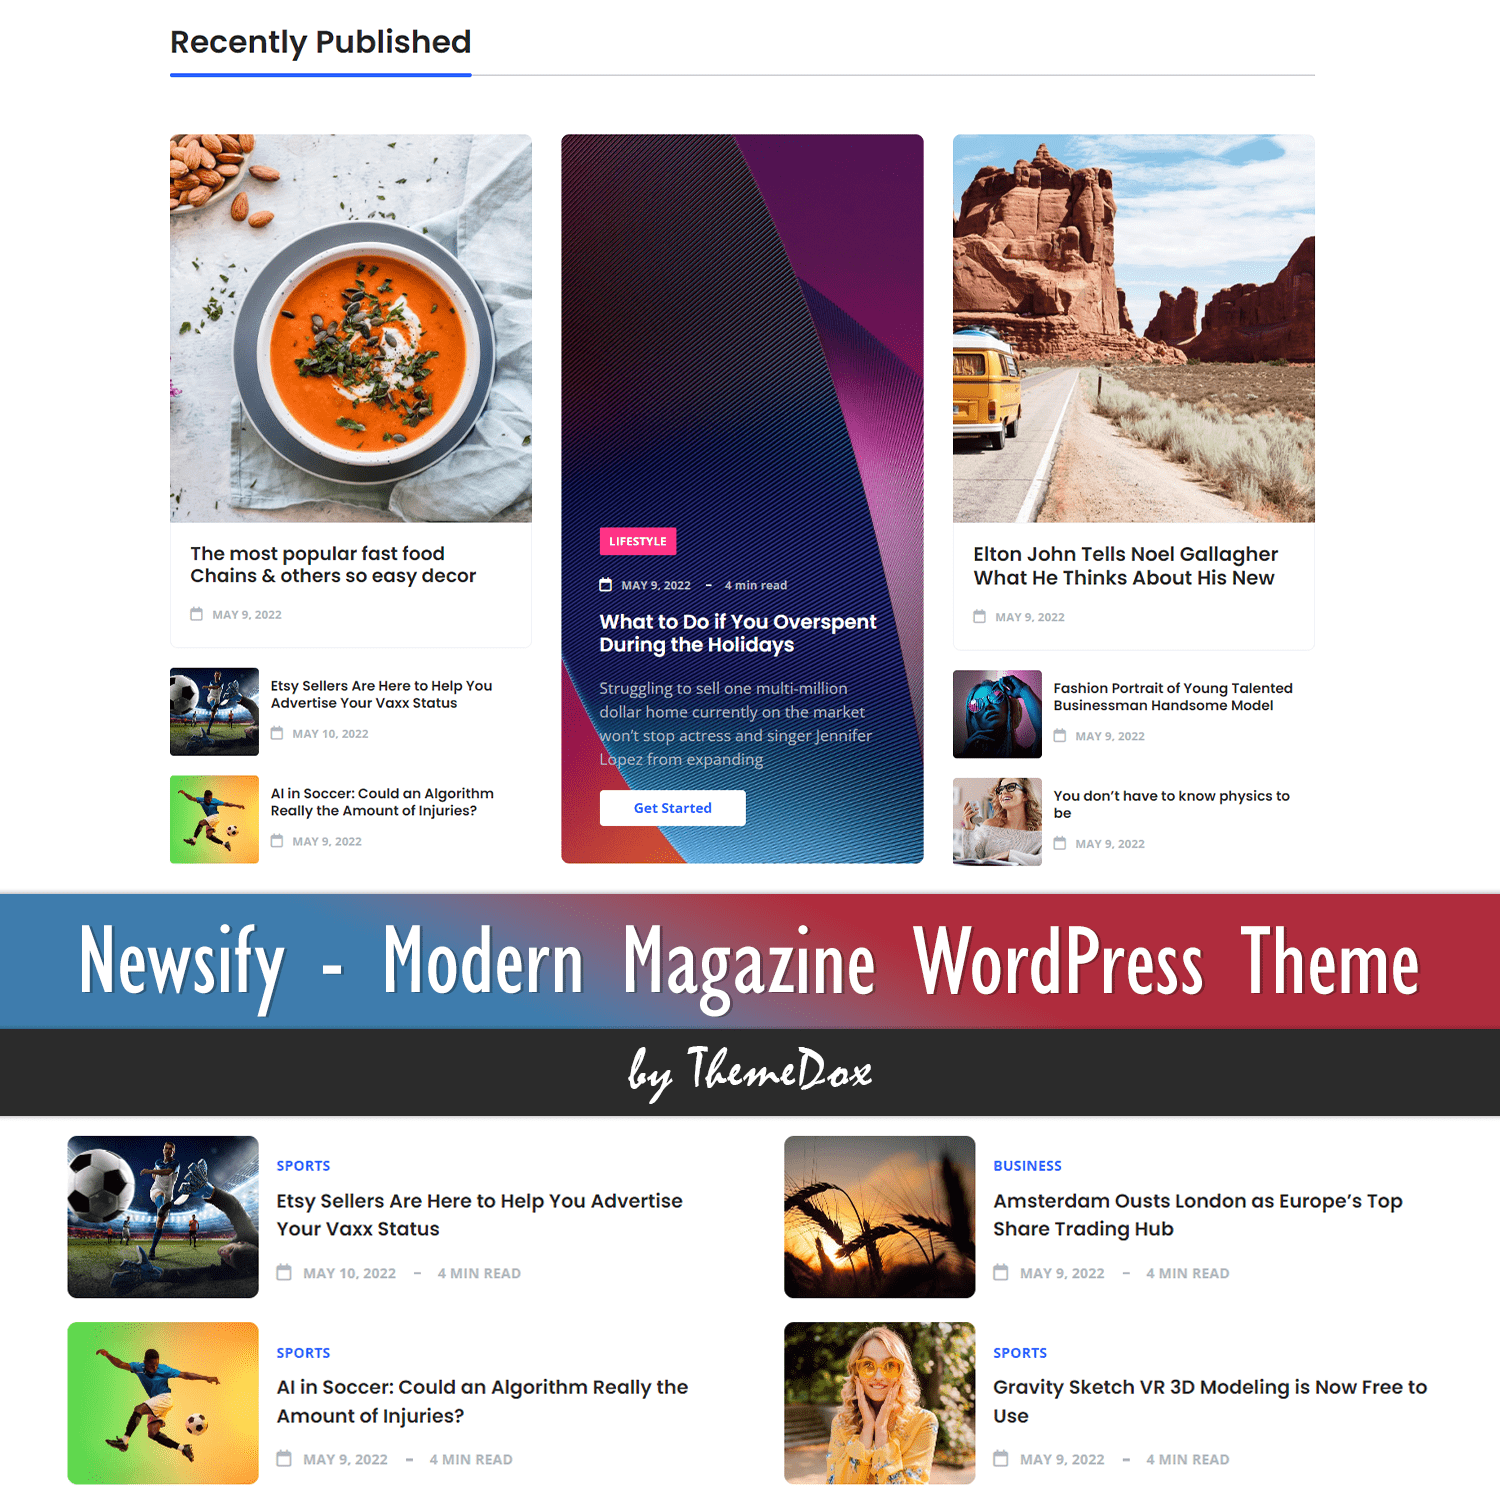 Recently published of the Newsify - Modern Magazine WordPress Theme.